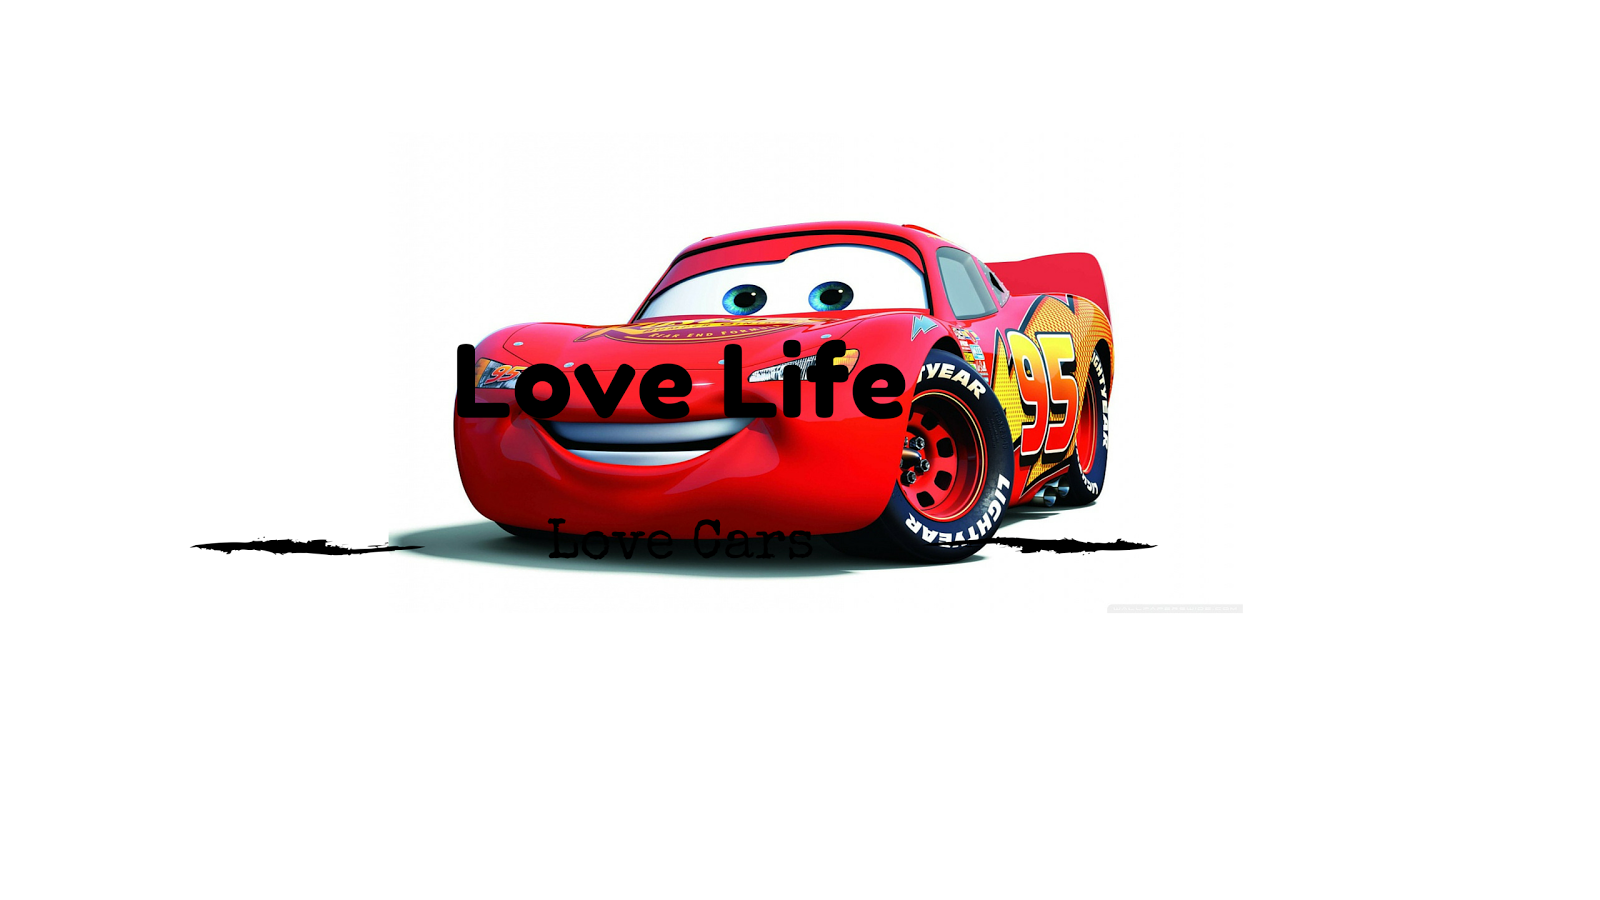 LOVE LIFE LOVE CARS